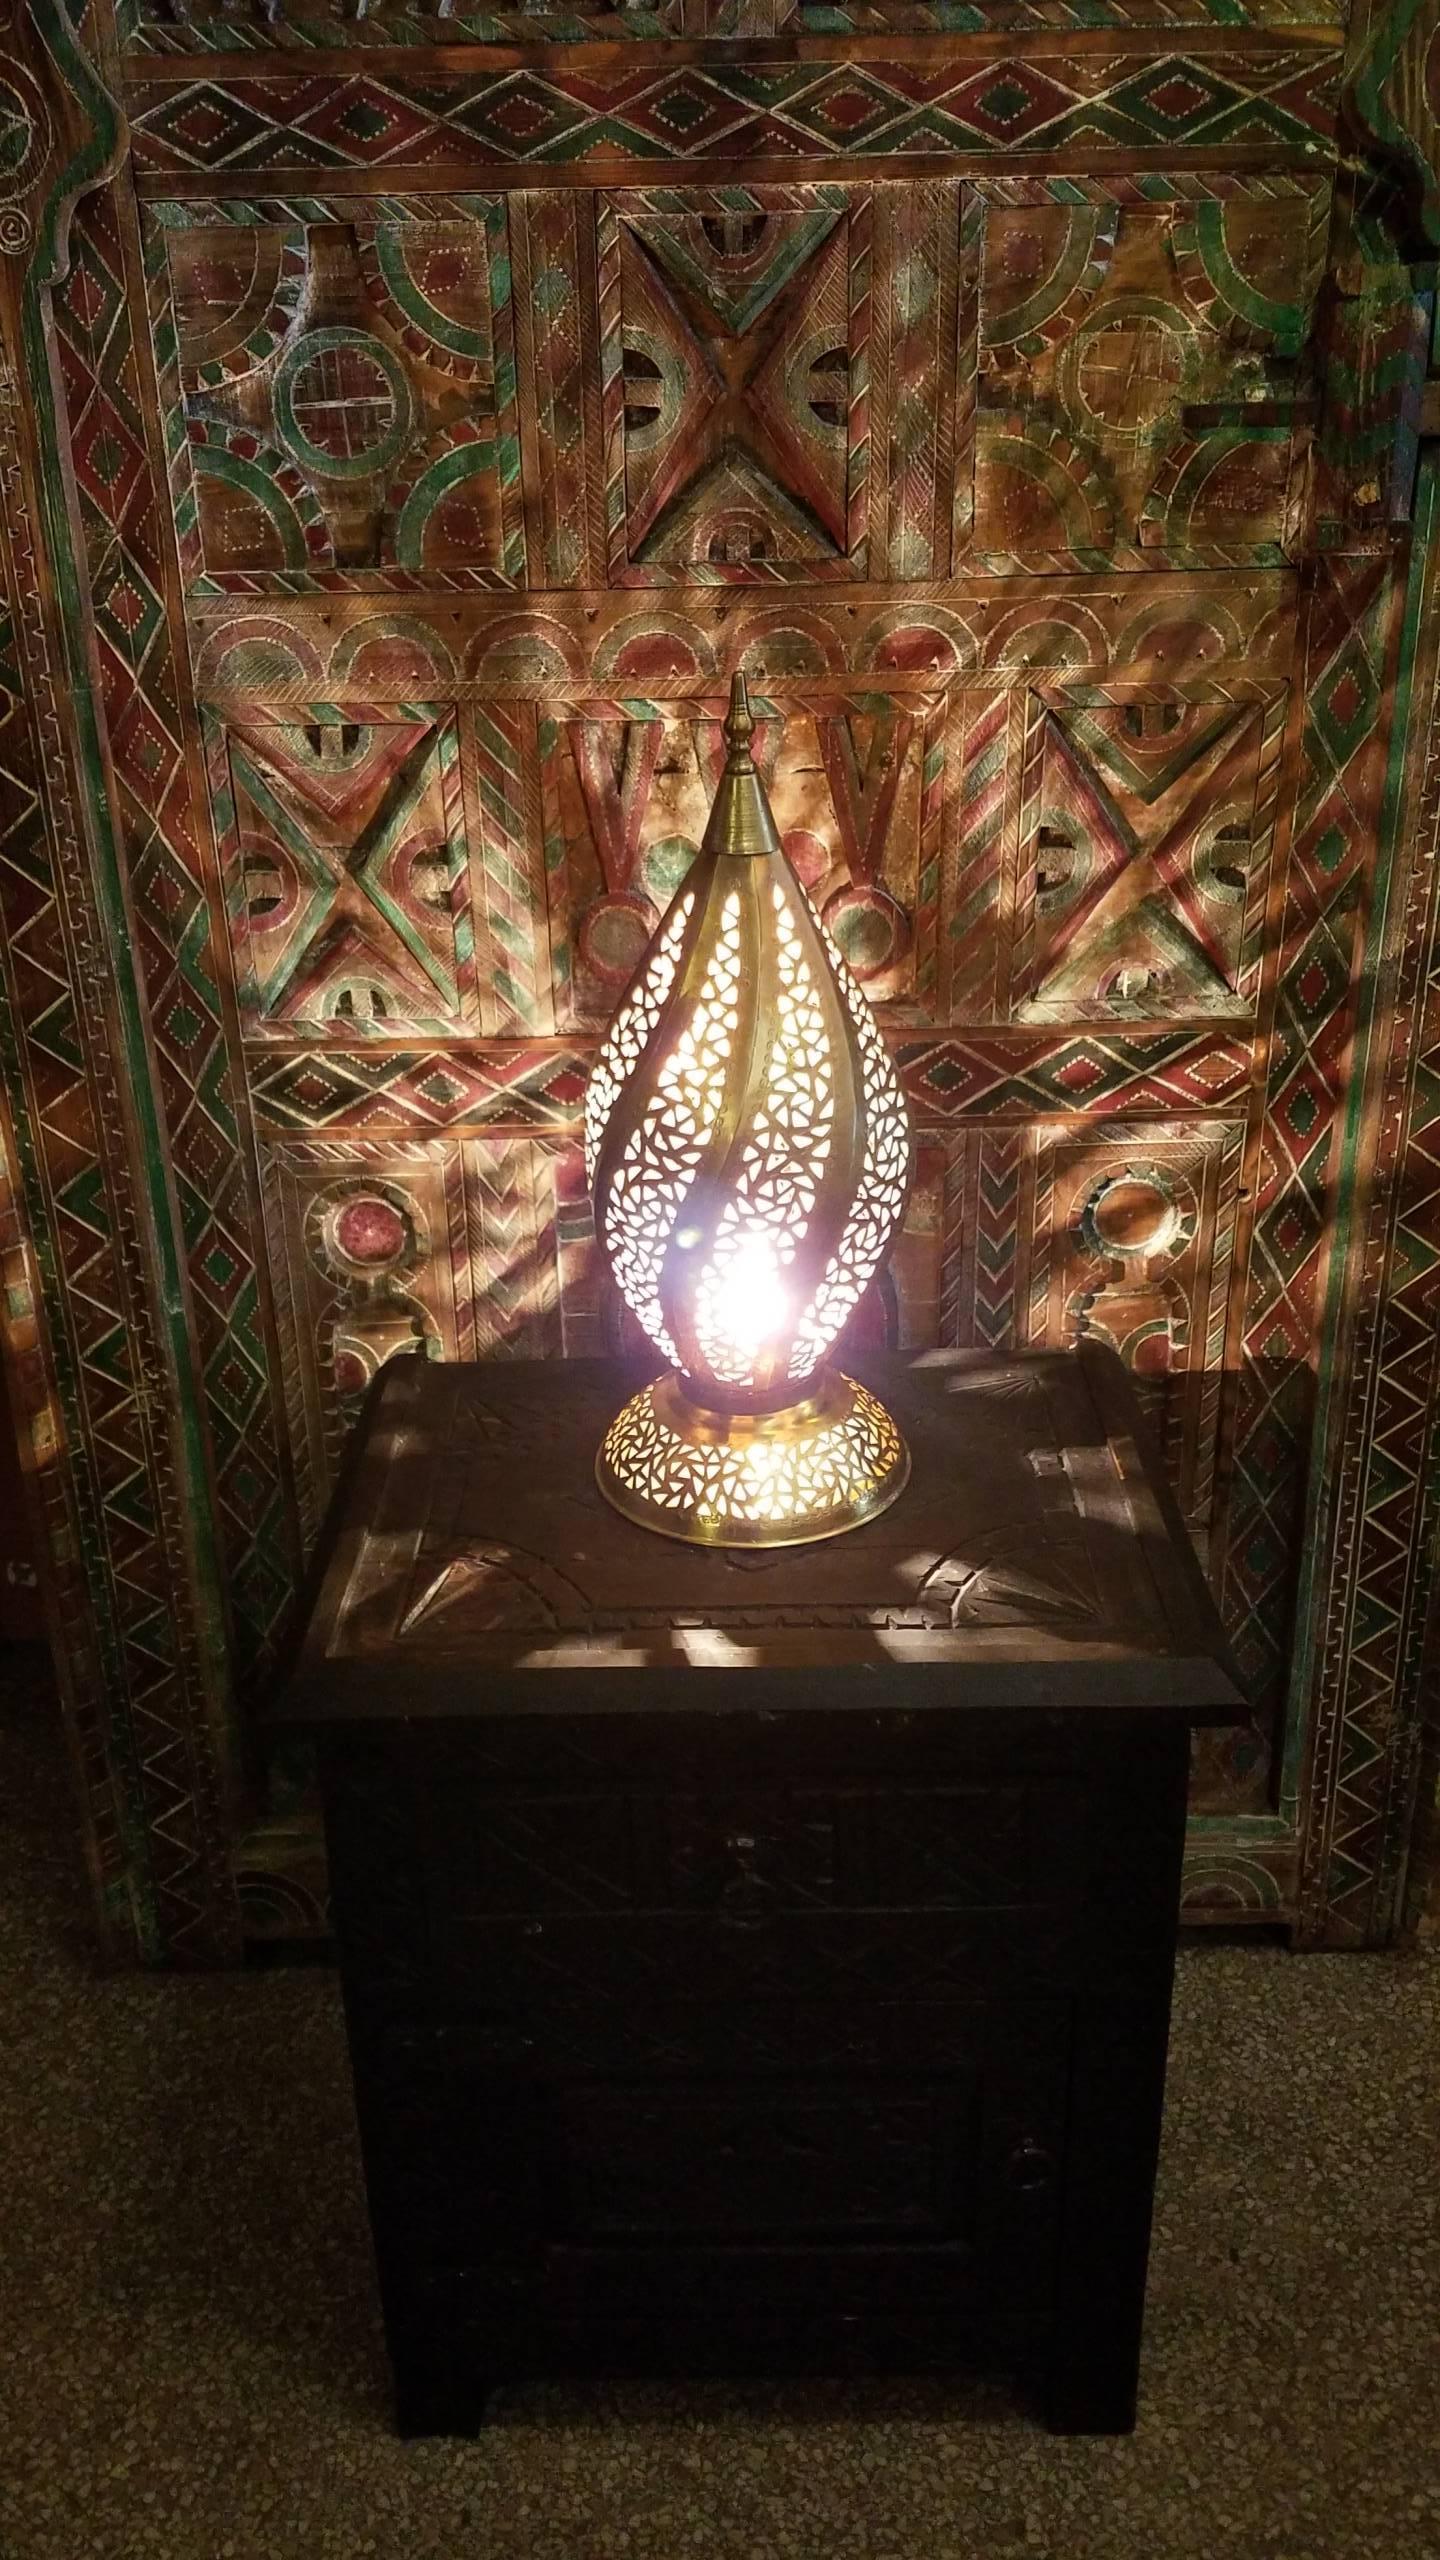 moroccan table lamp